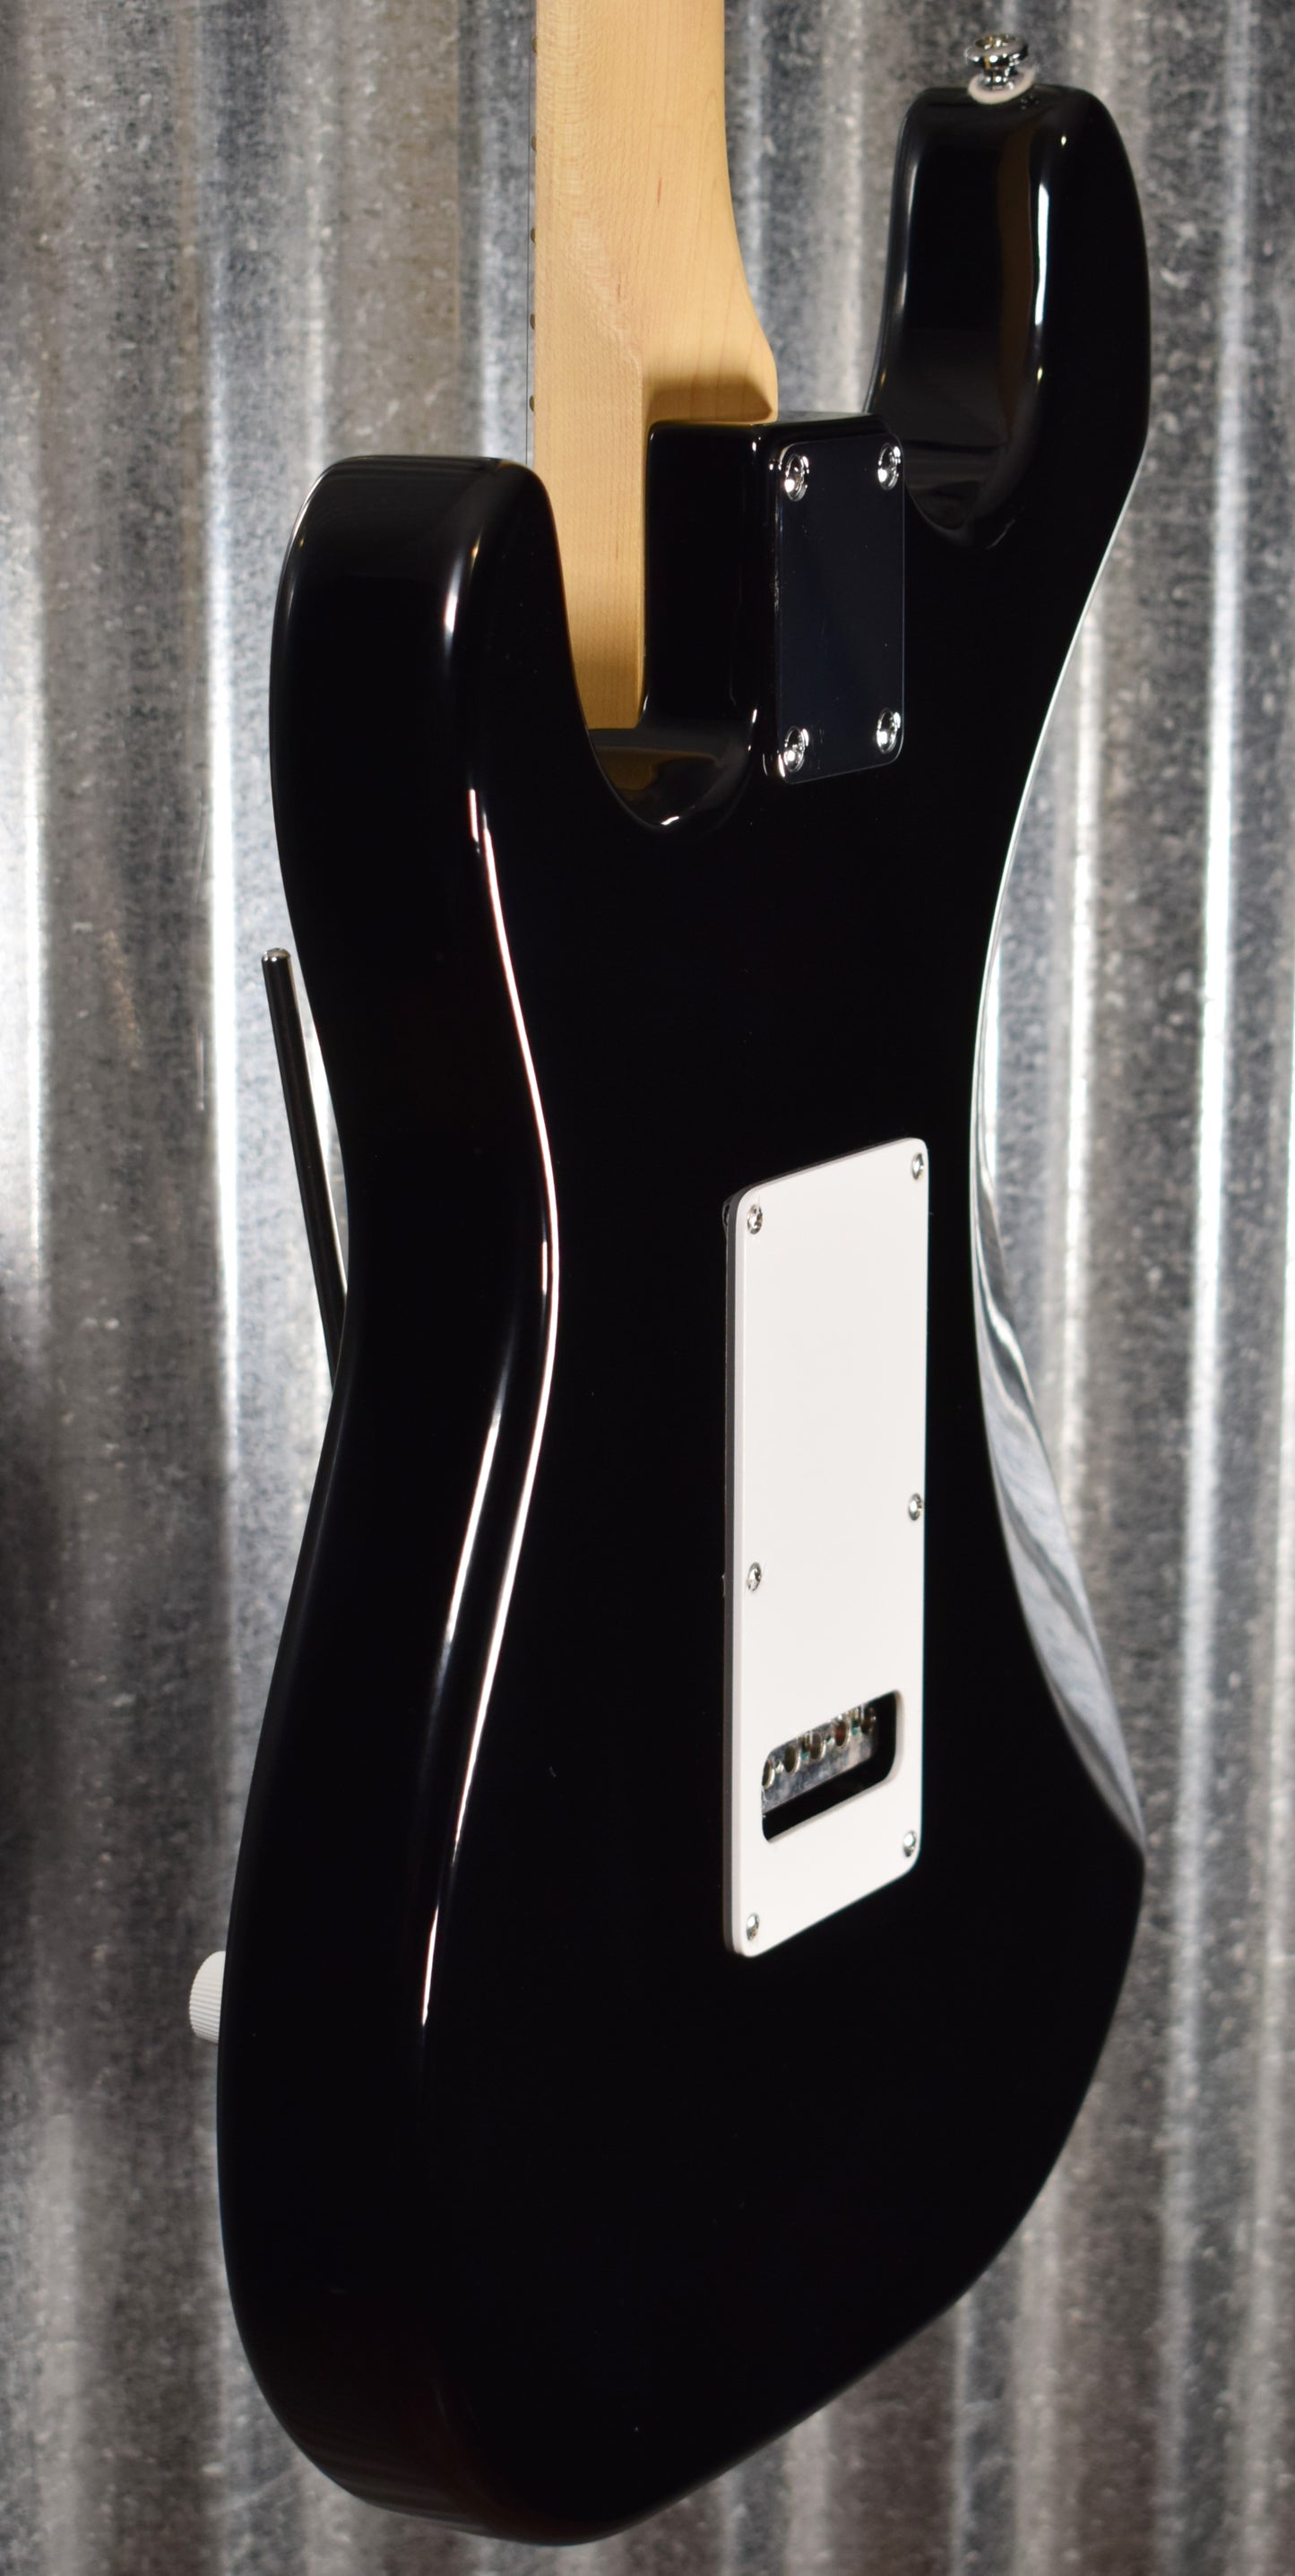 G&L Tribute Legacy Gloss Black Guitar #3305 Demo